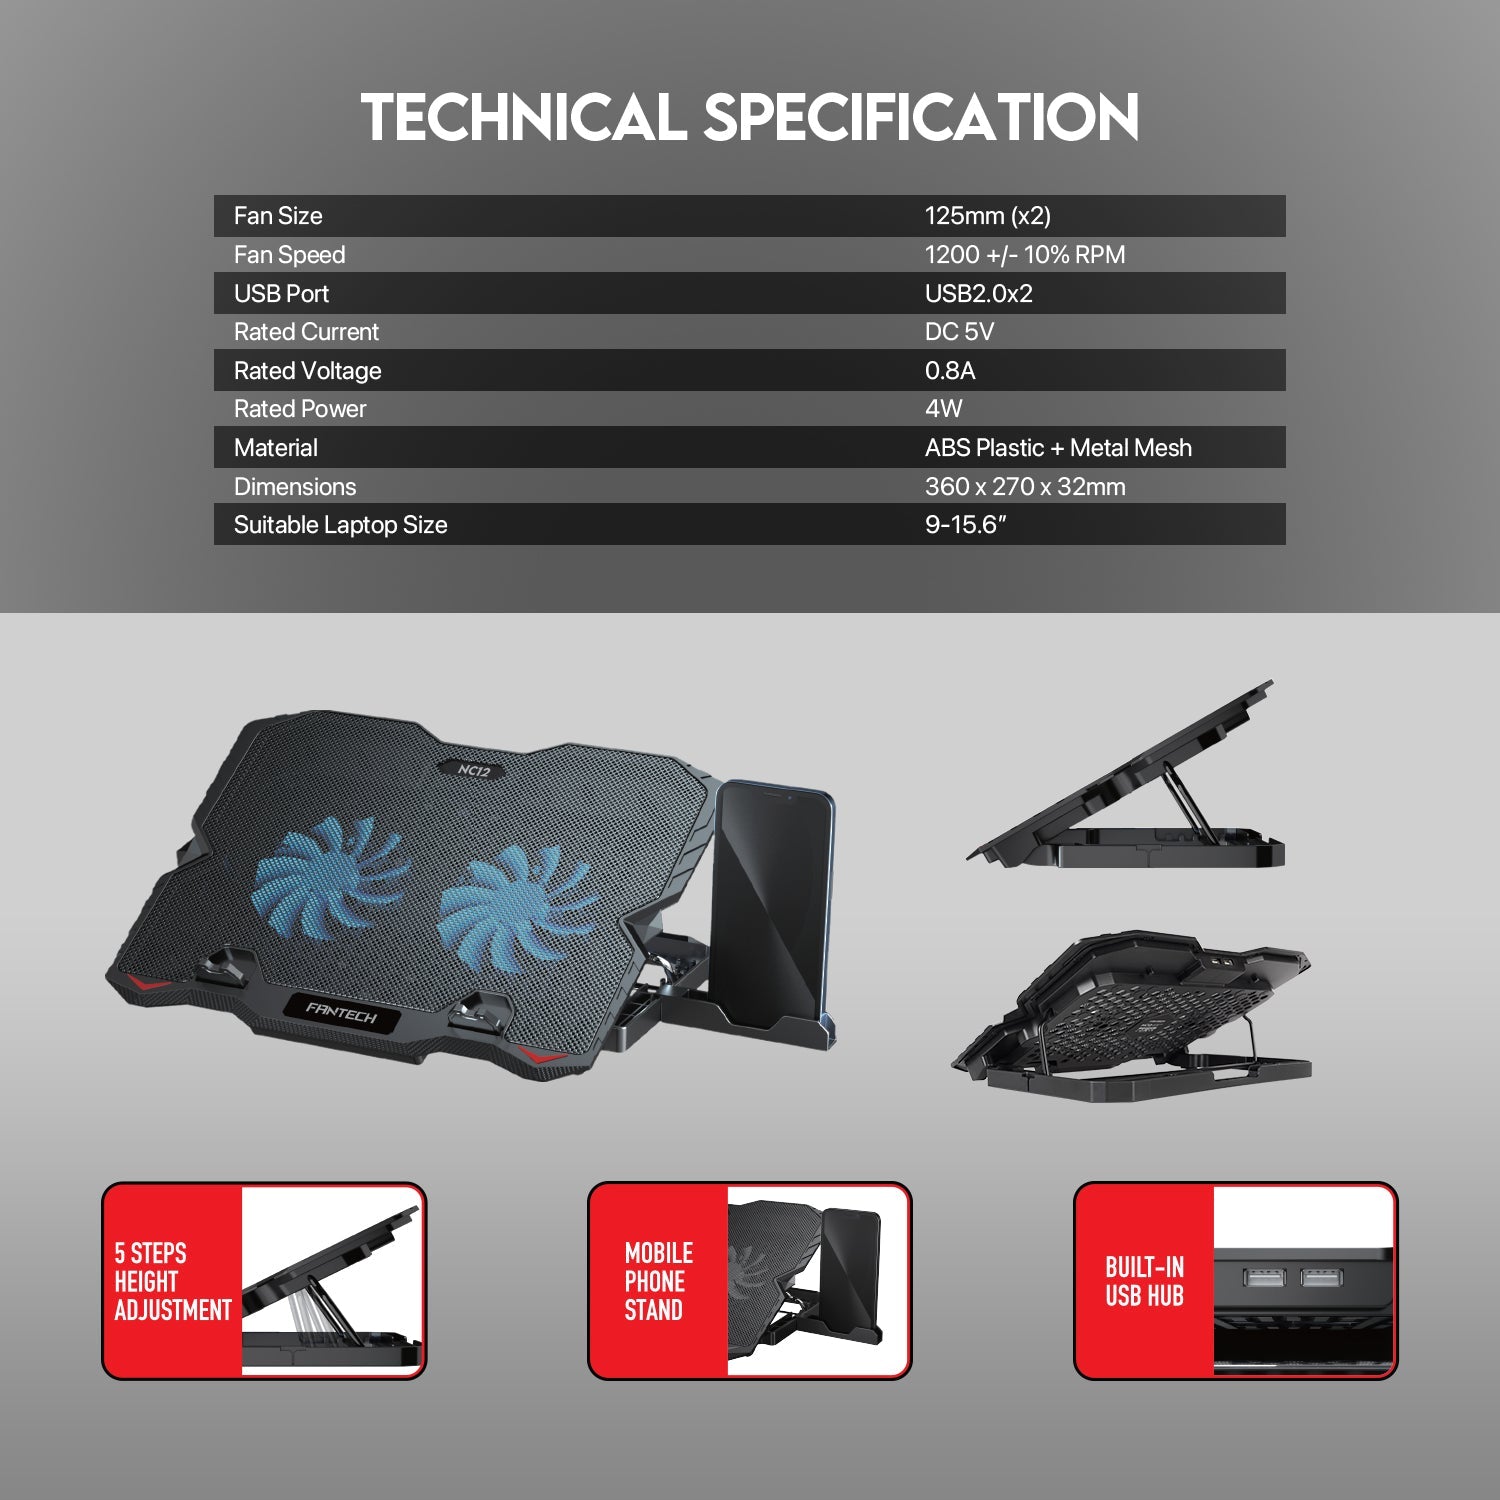 Fantech NoteBook Cooler NC12 Two Fan Suitable For 9-15.6 Inch Laptop